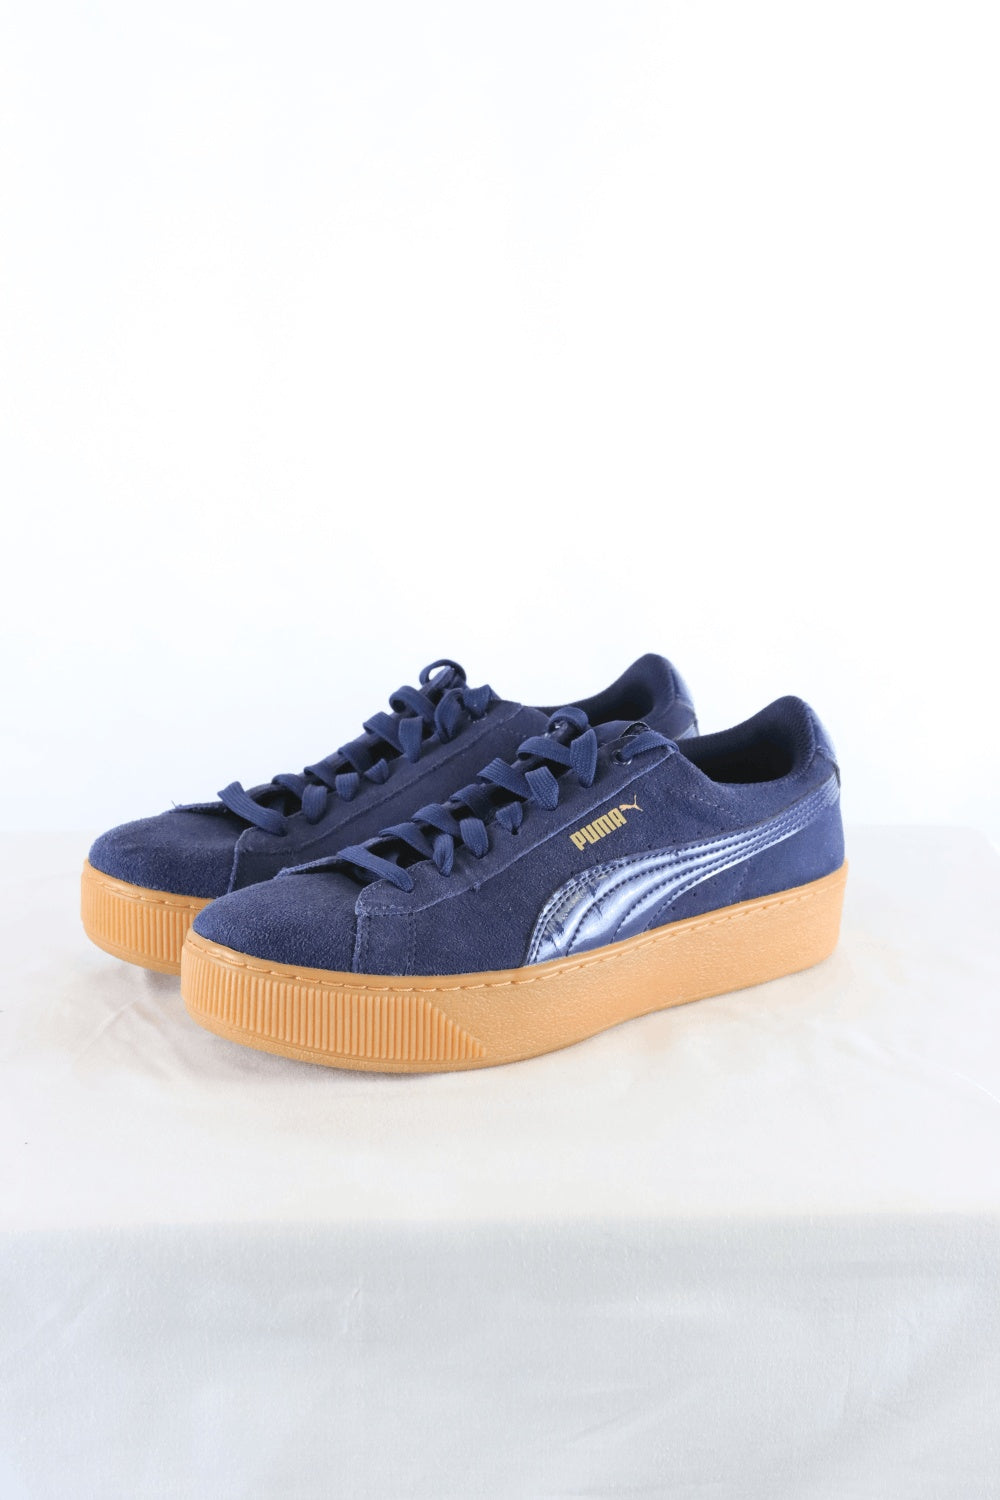 Puma Blue Sneakers 9